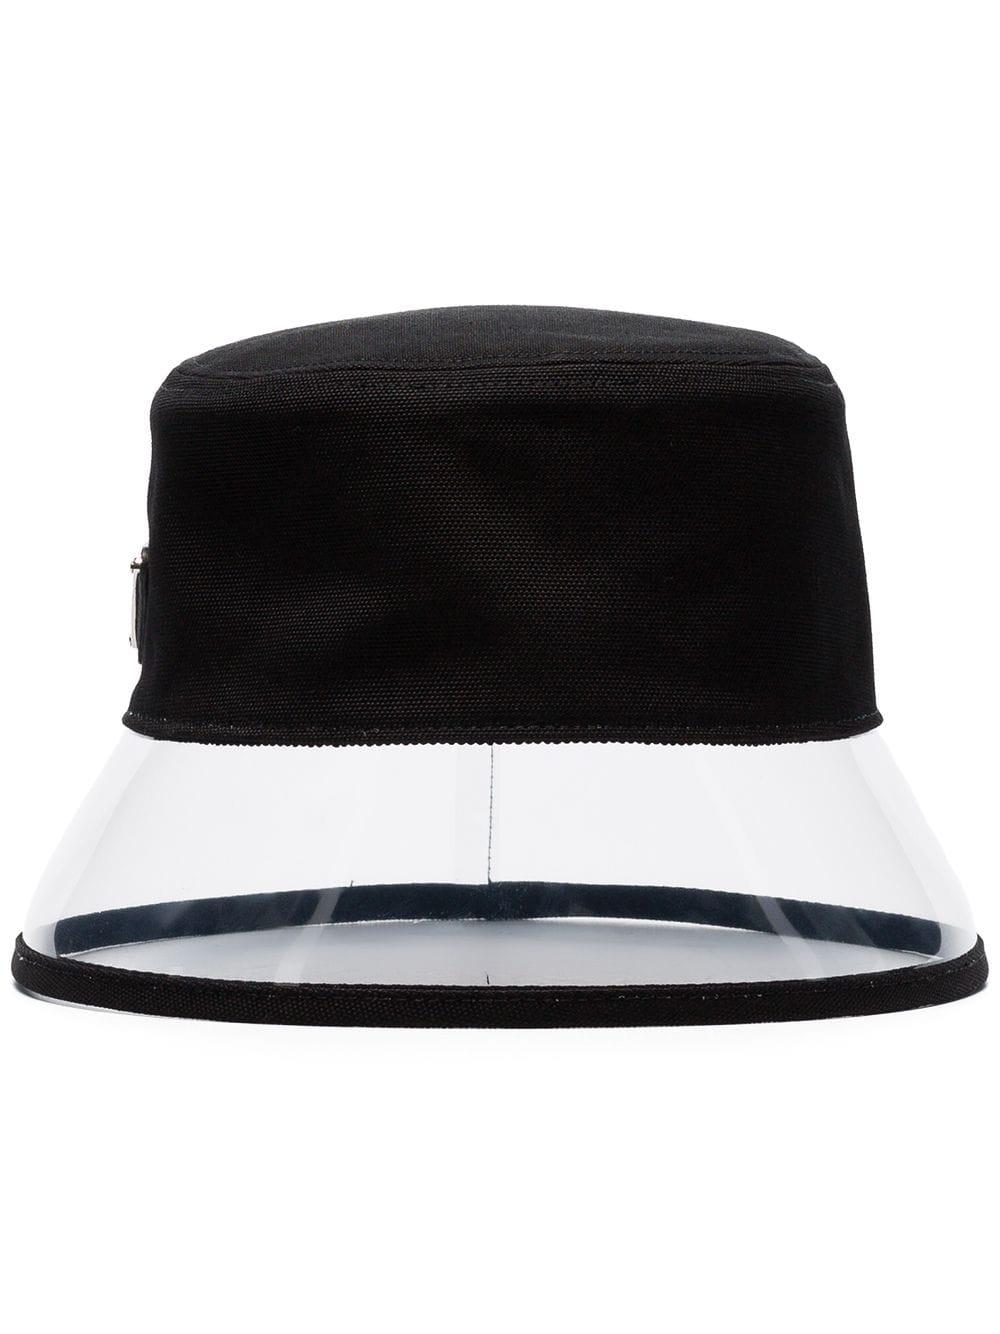 Prada Logo-plaque Pvc And Canvas Bucket Hat in Black | Lyst